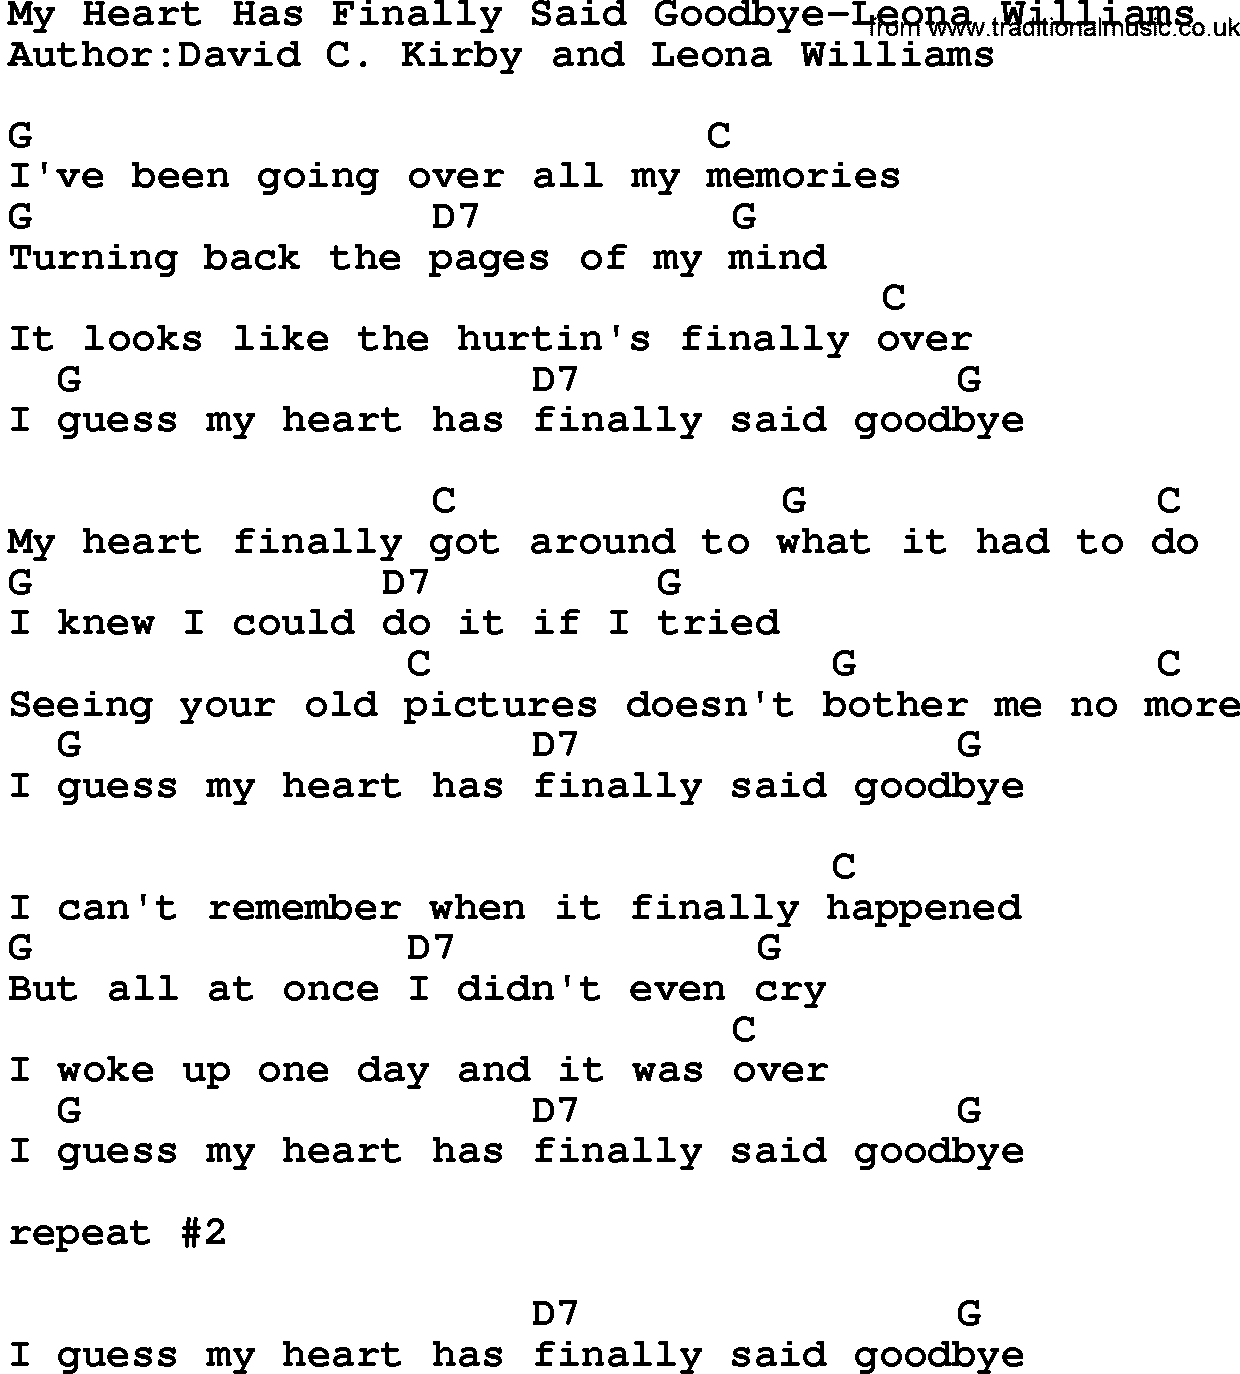 Country music song: My Heart Has Finally Said Goodbye-Leona Williams lyrics and chords